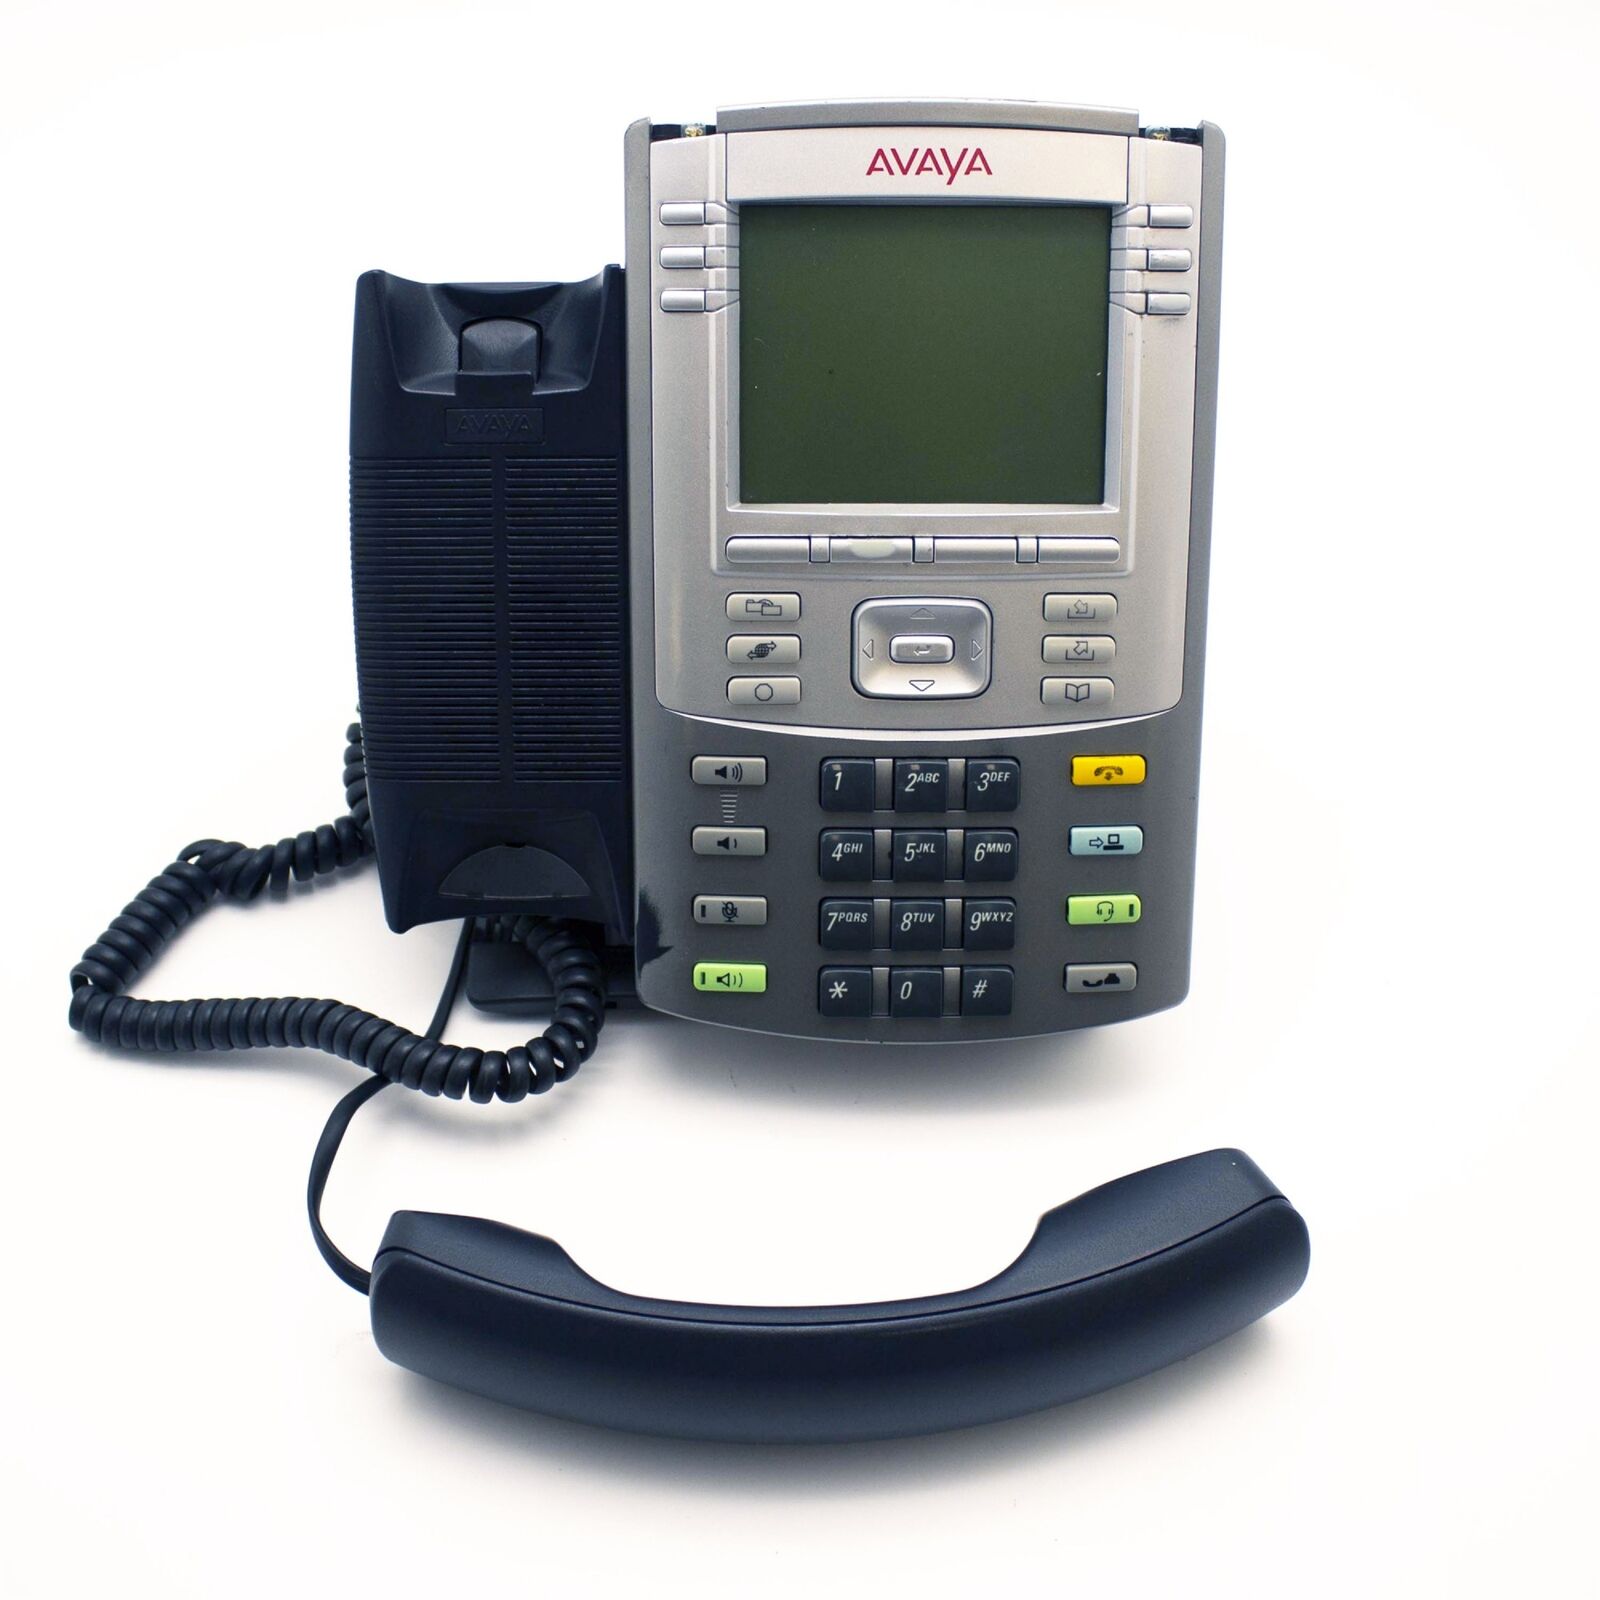 Avaya Nortel 1140e Phone Voip Poe IP Sip Multiline Handset Business_